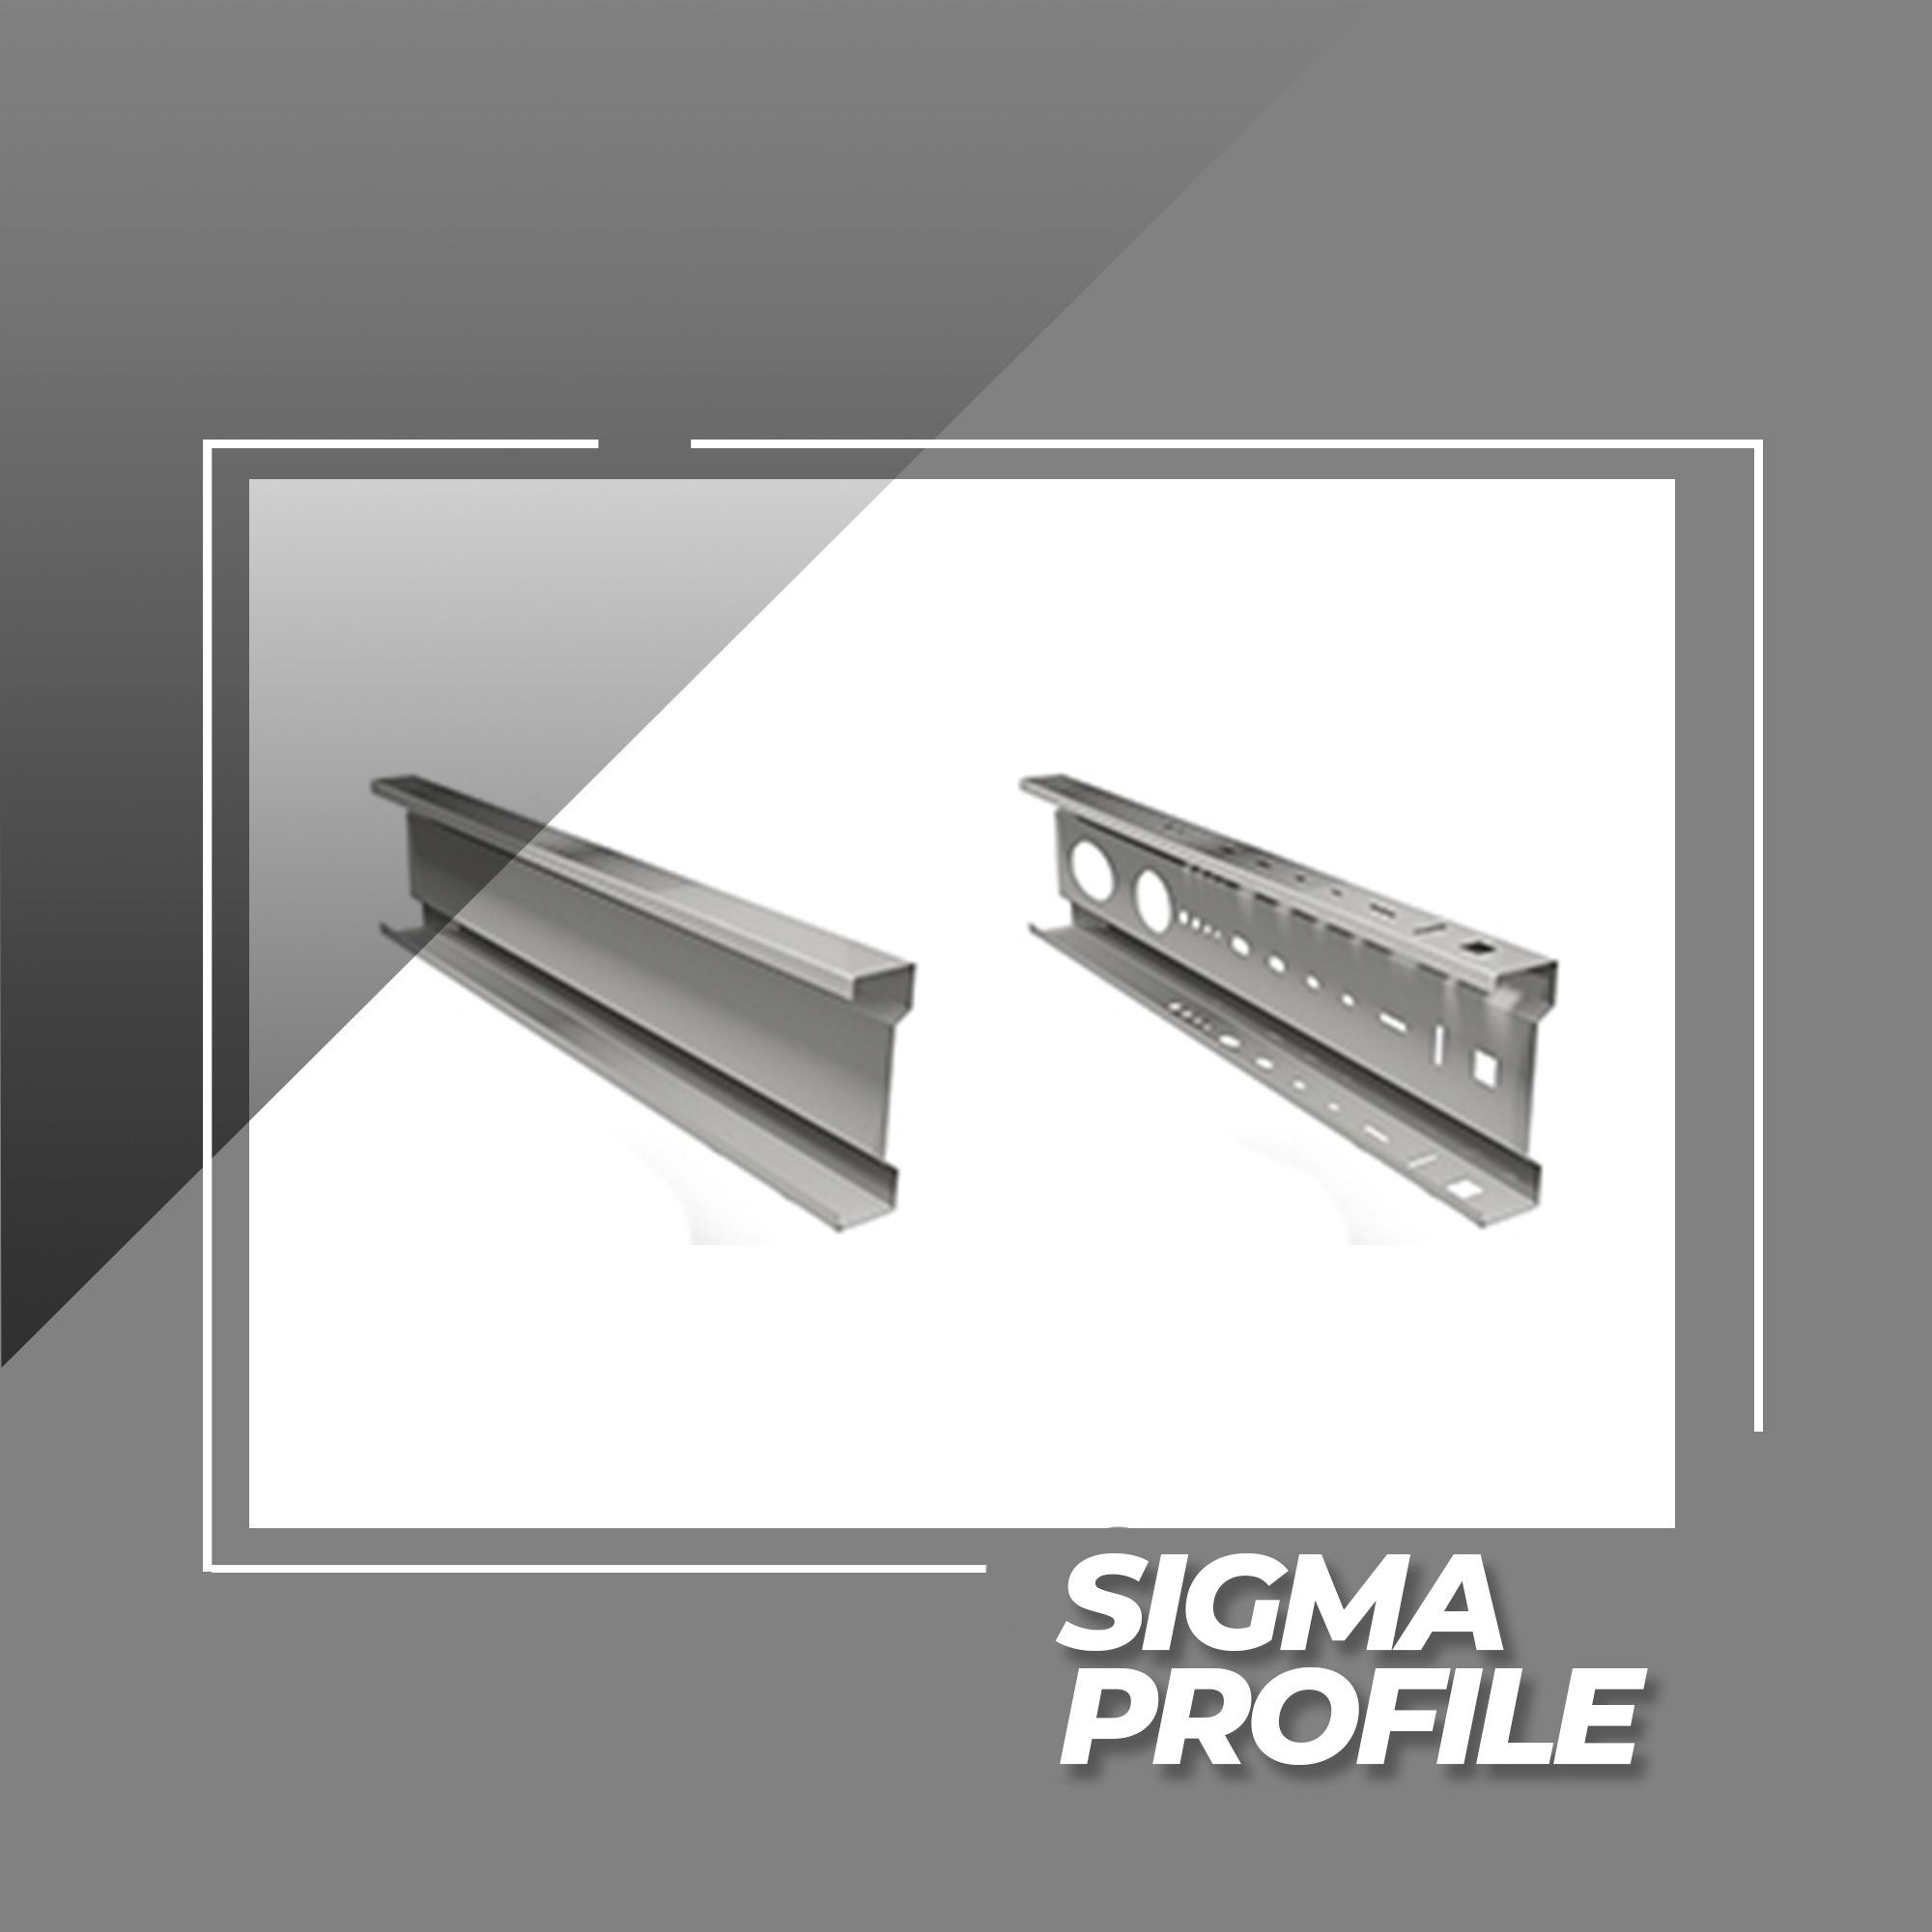 Sigma Profile